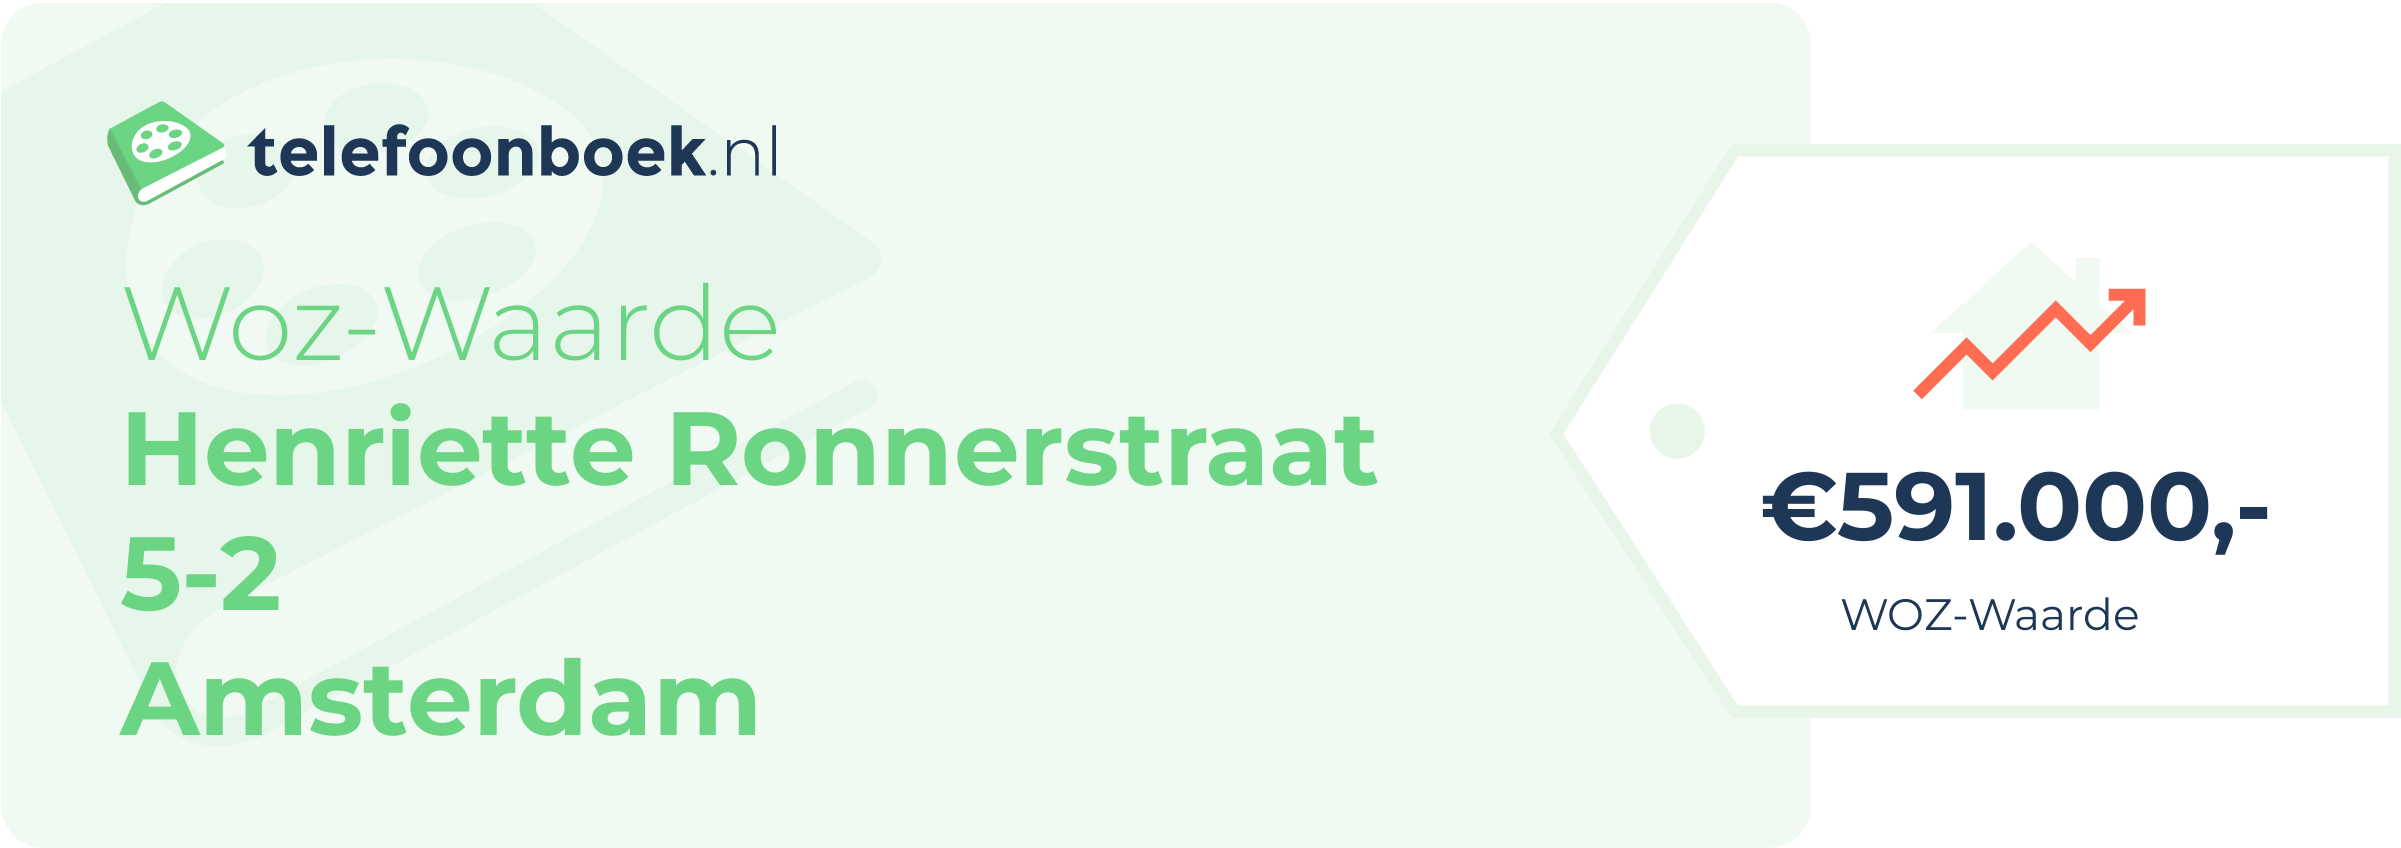 WOZ-waarde Henriette Ronnerstraat 5-2 Amsterdam